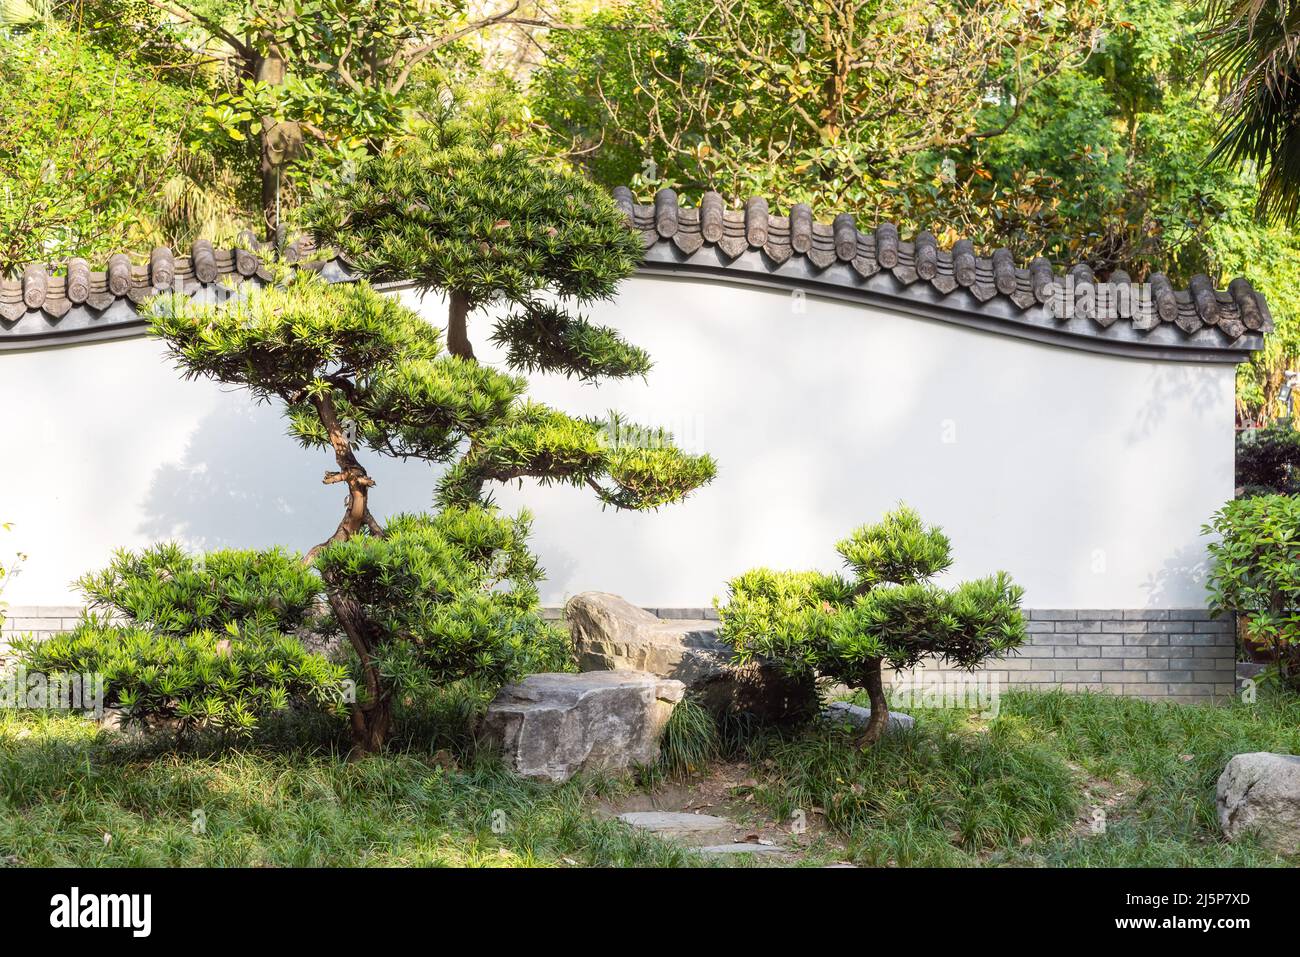 Bonsai trees against a white wall in a park Stock Photo